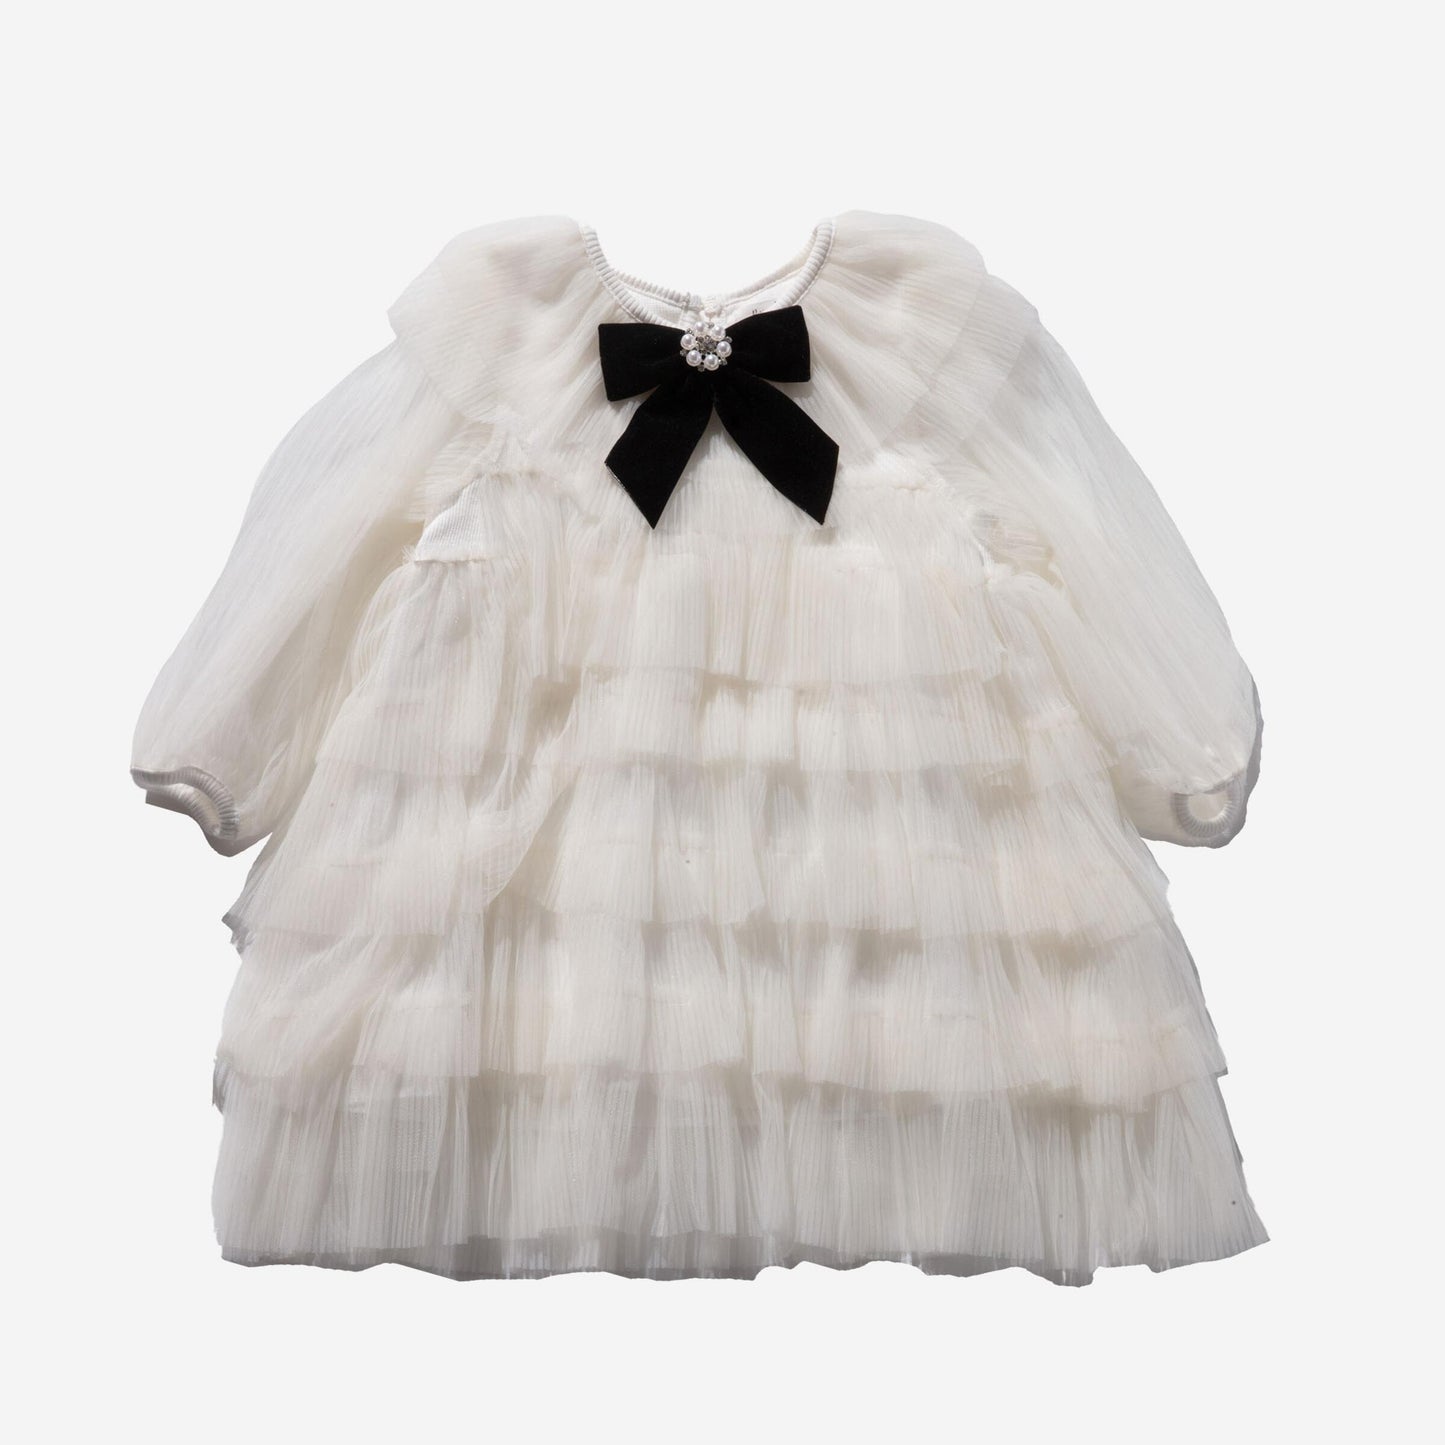 Six Layered Tulle Dress with Velvet Bow | Ivory, sz 6